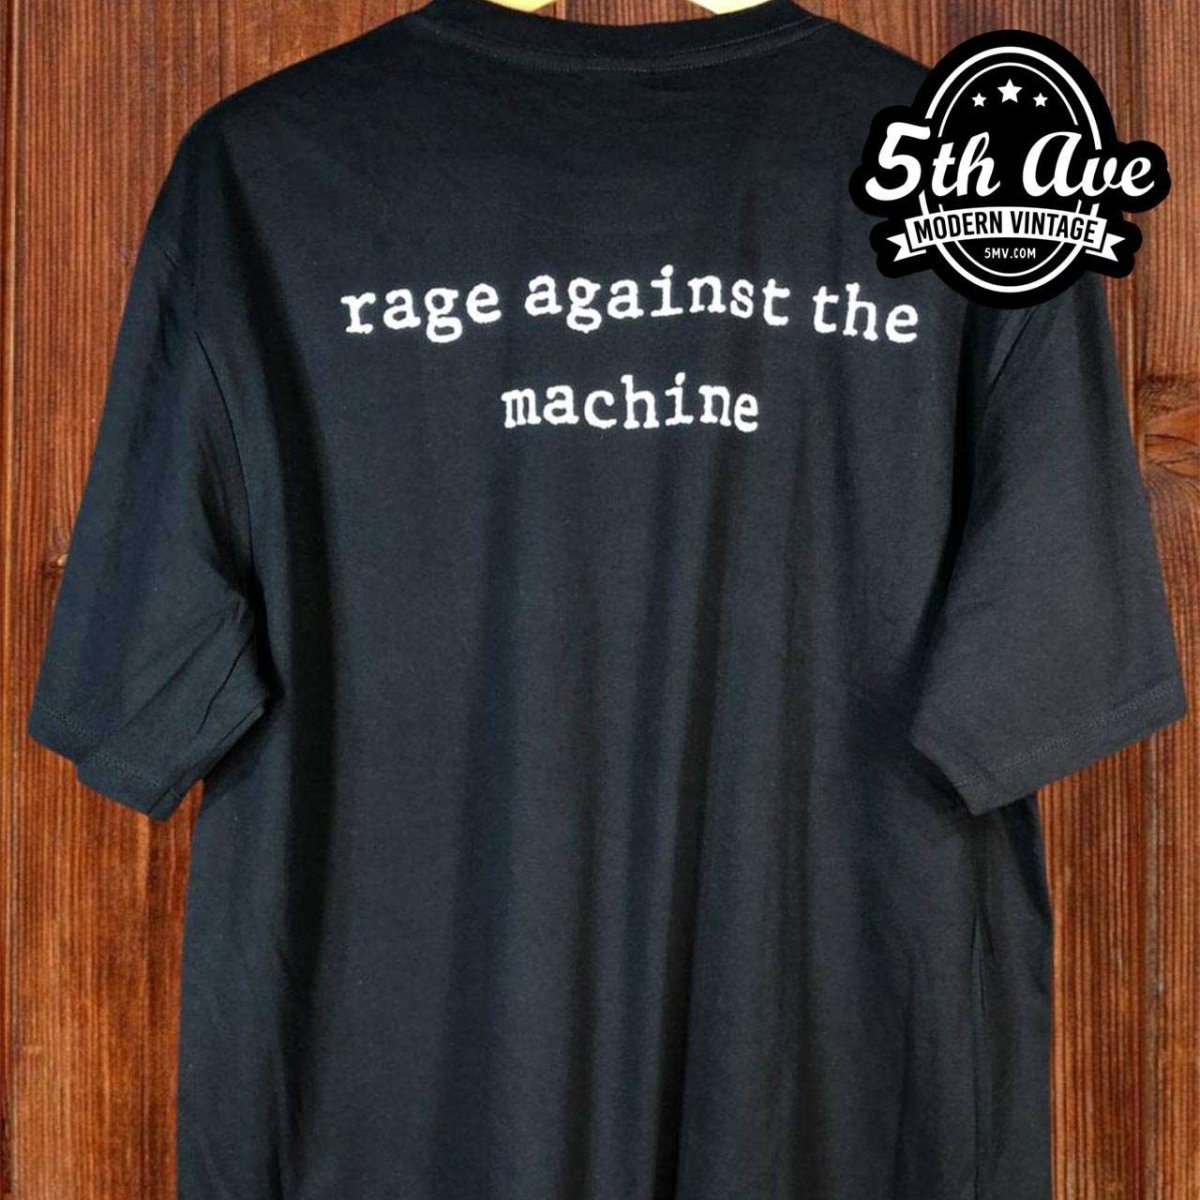 Rage Against the Machine Burning Monk - New Vintage Band T shirt - Vintage Band Shirts